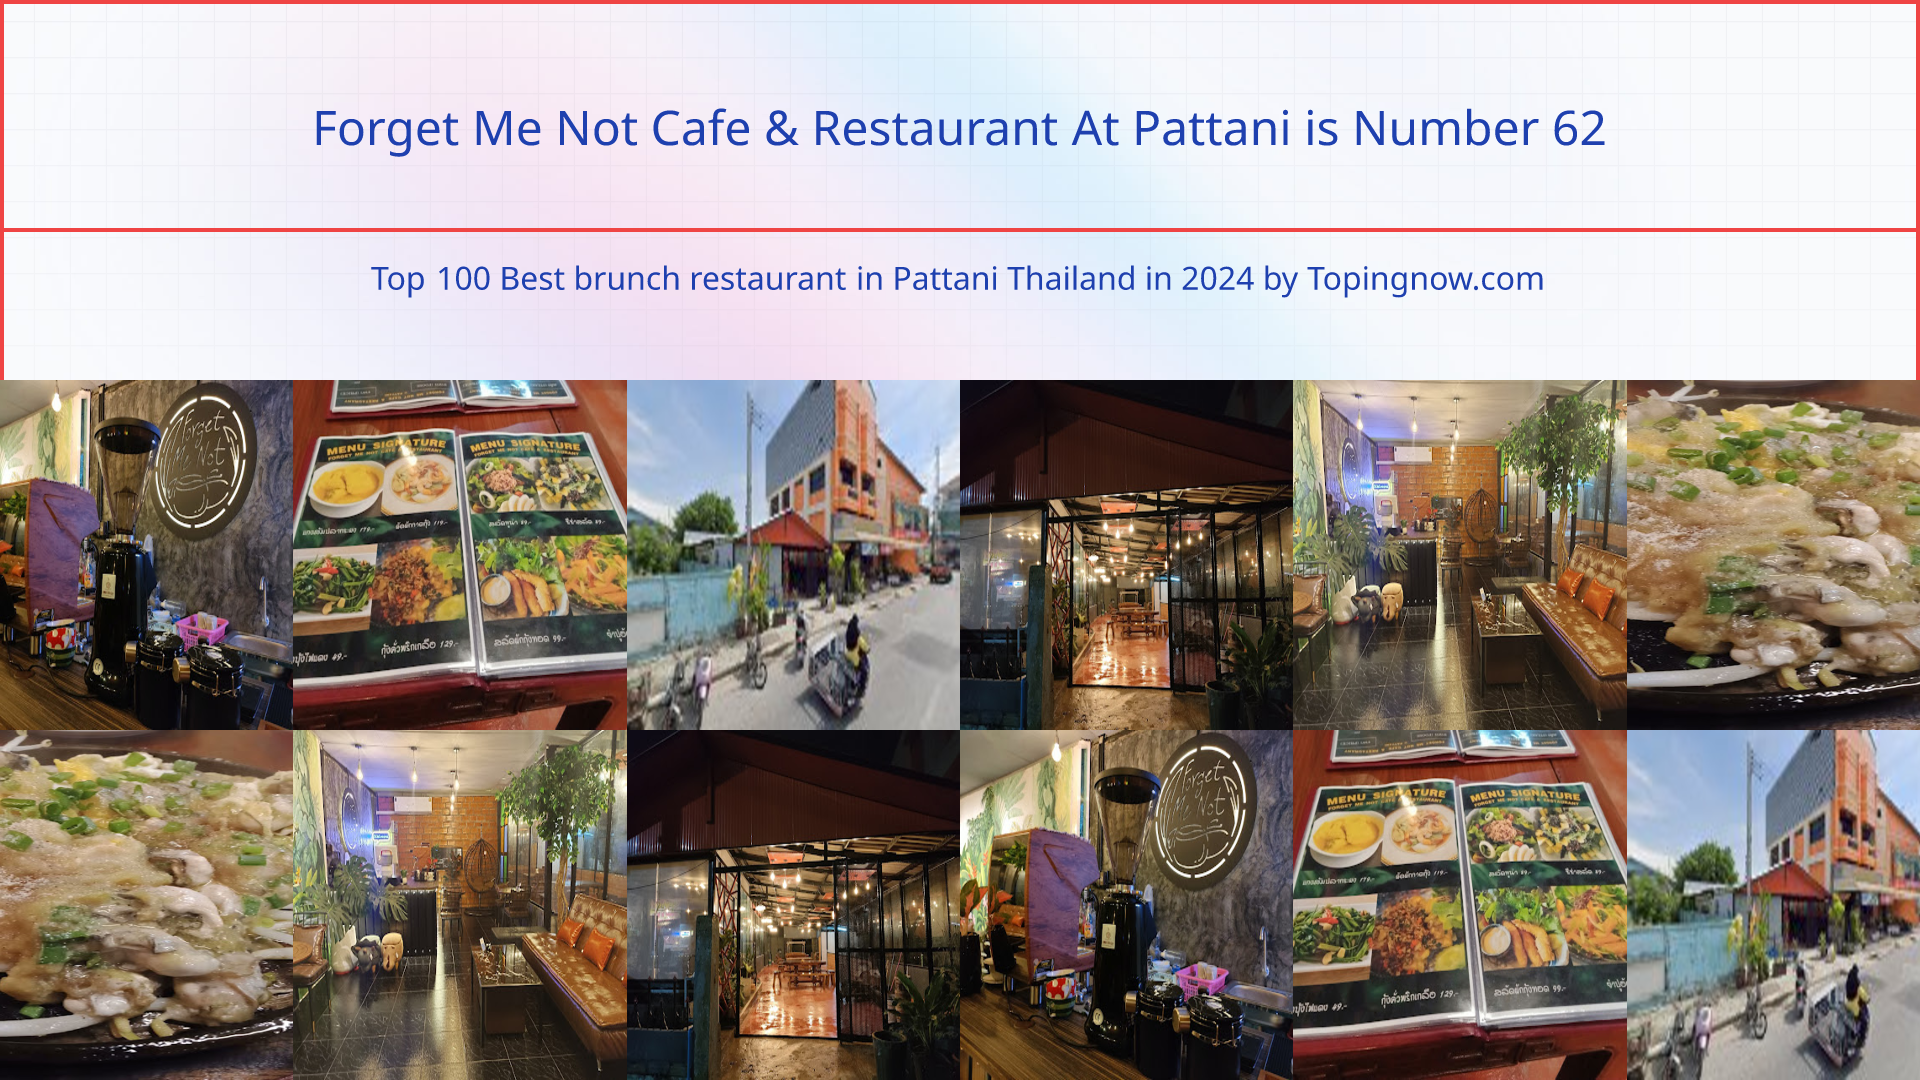 Forget Me Not Cafe & Restaurant At Pattani: Top 100 Best brunch restaurant in Pattani Thailand in 2024